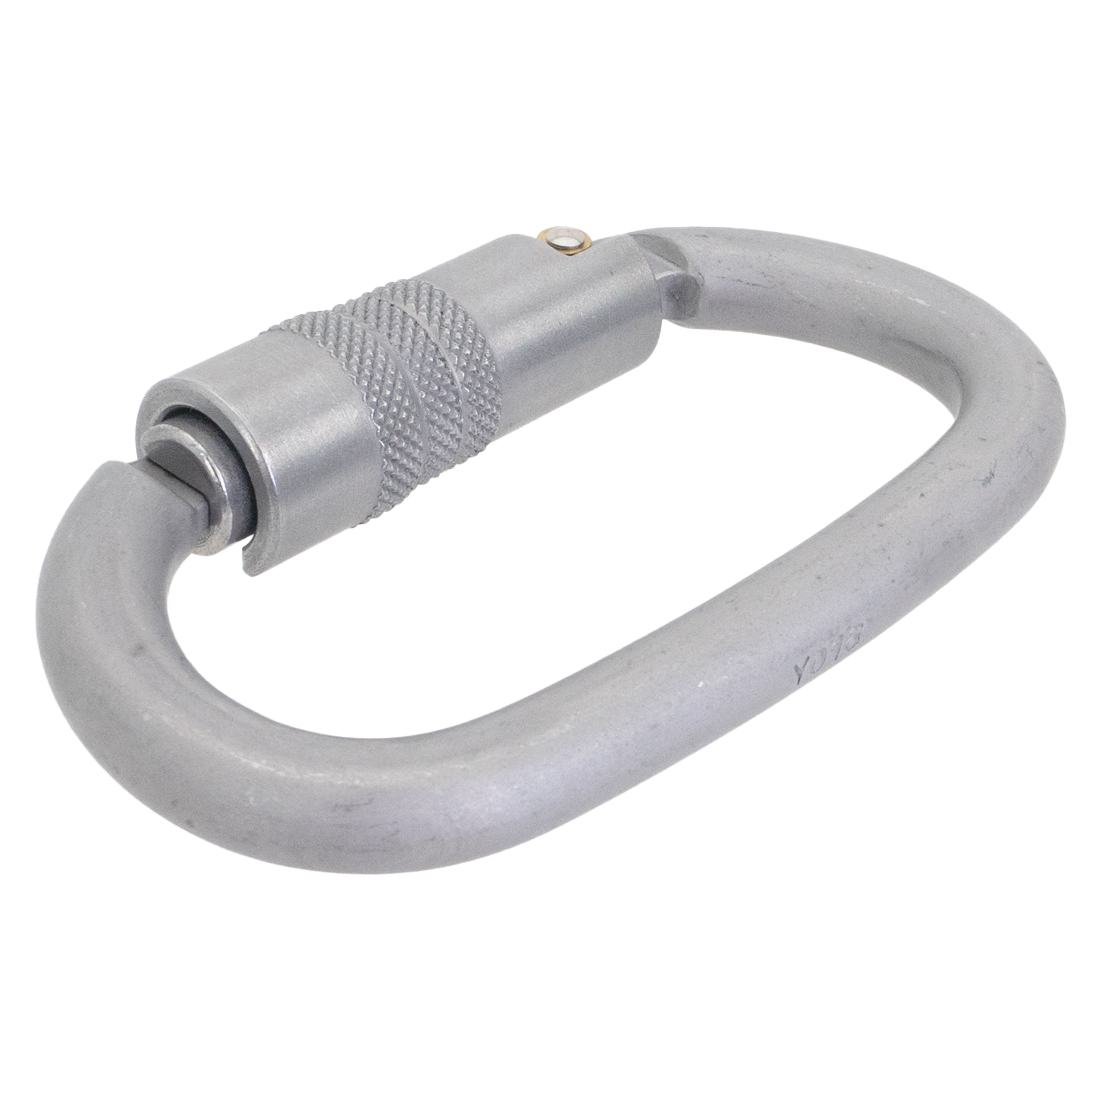 KONG Carbon Carabiner - Ovalone Twist Lock ANSI